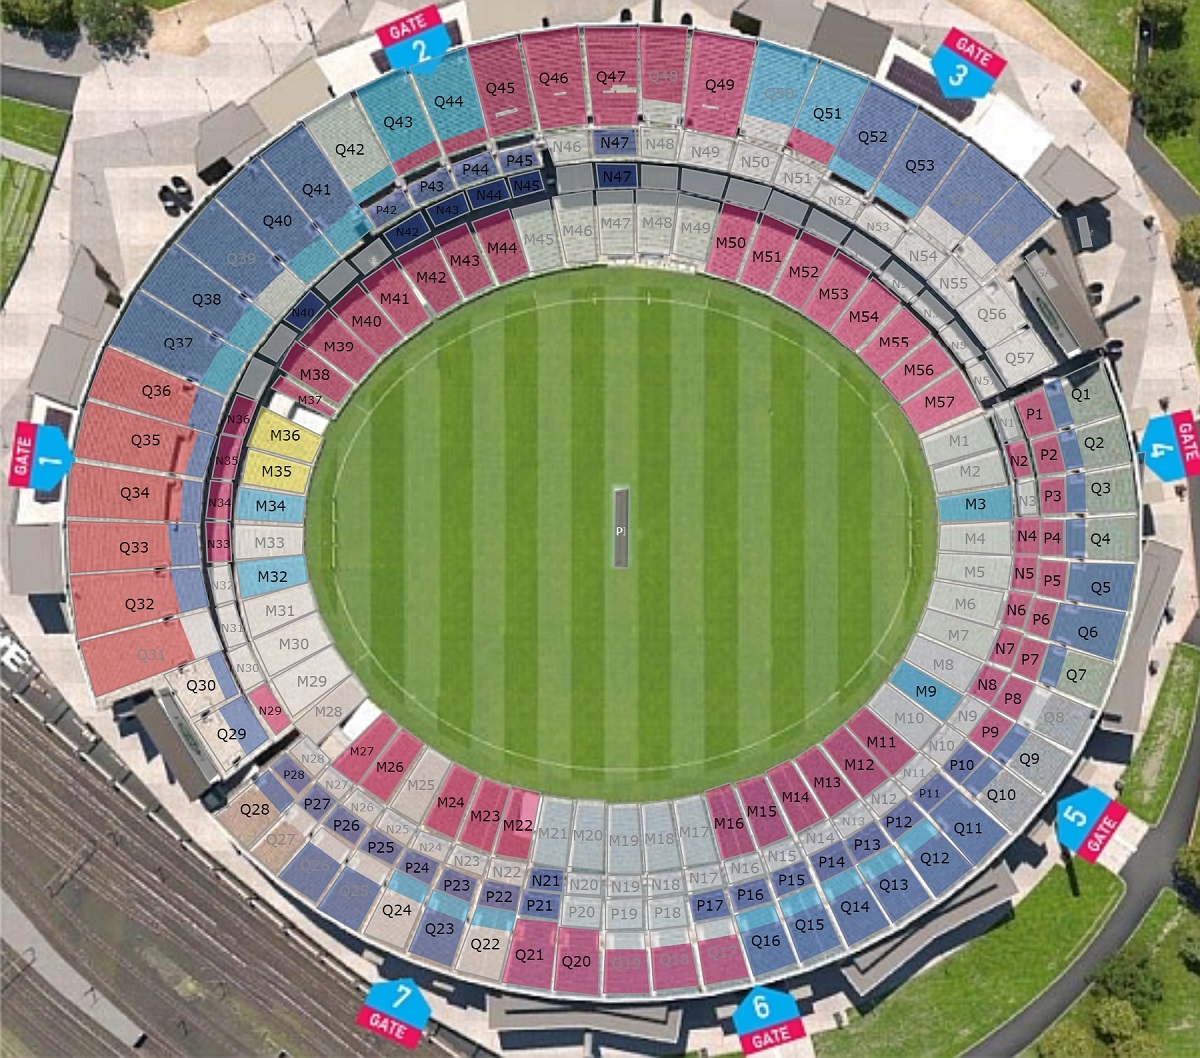 Melbourne Cricket Ground, Melbourne, Australia Seating Plan